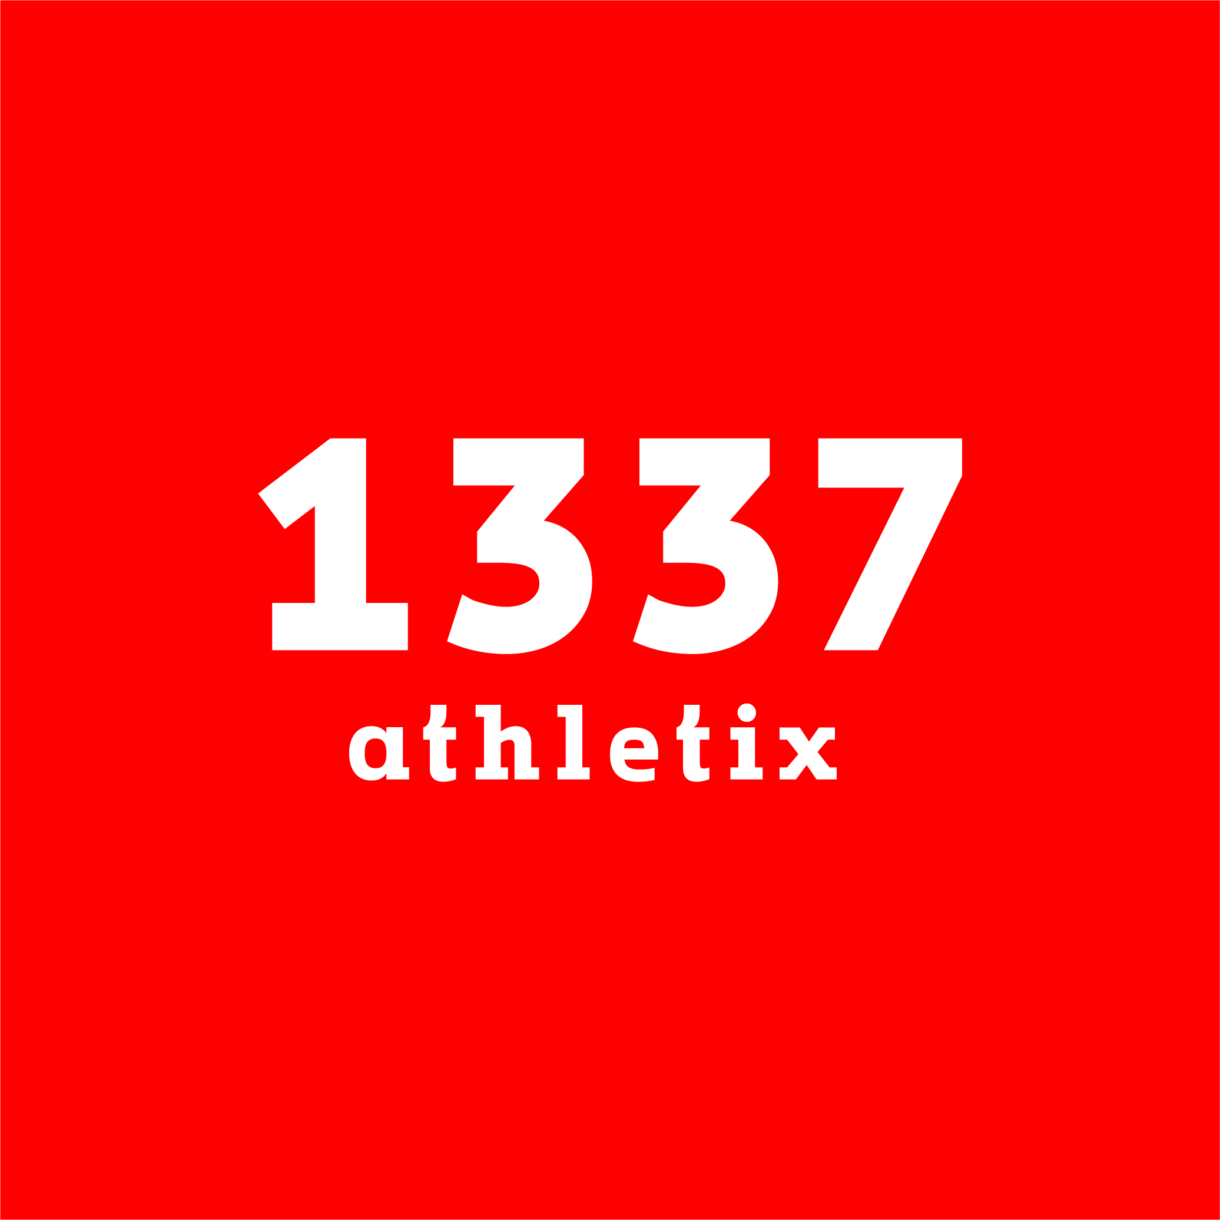 1337 athletix type